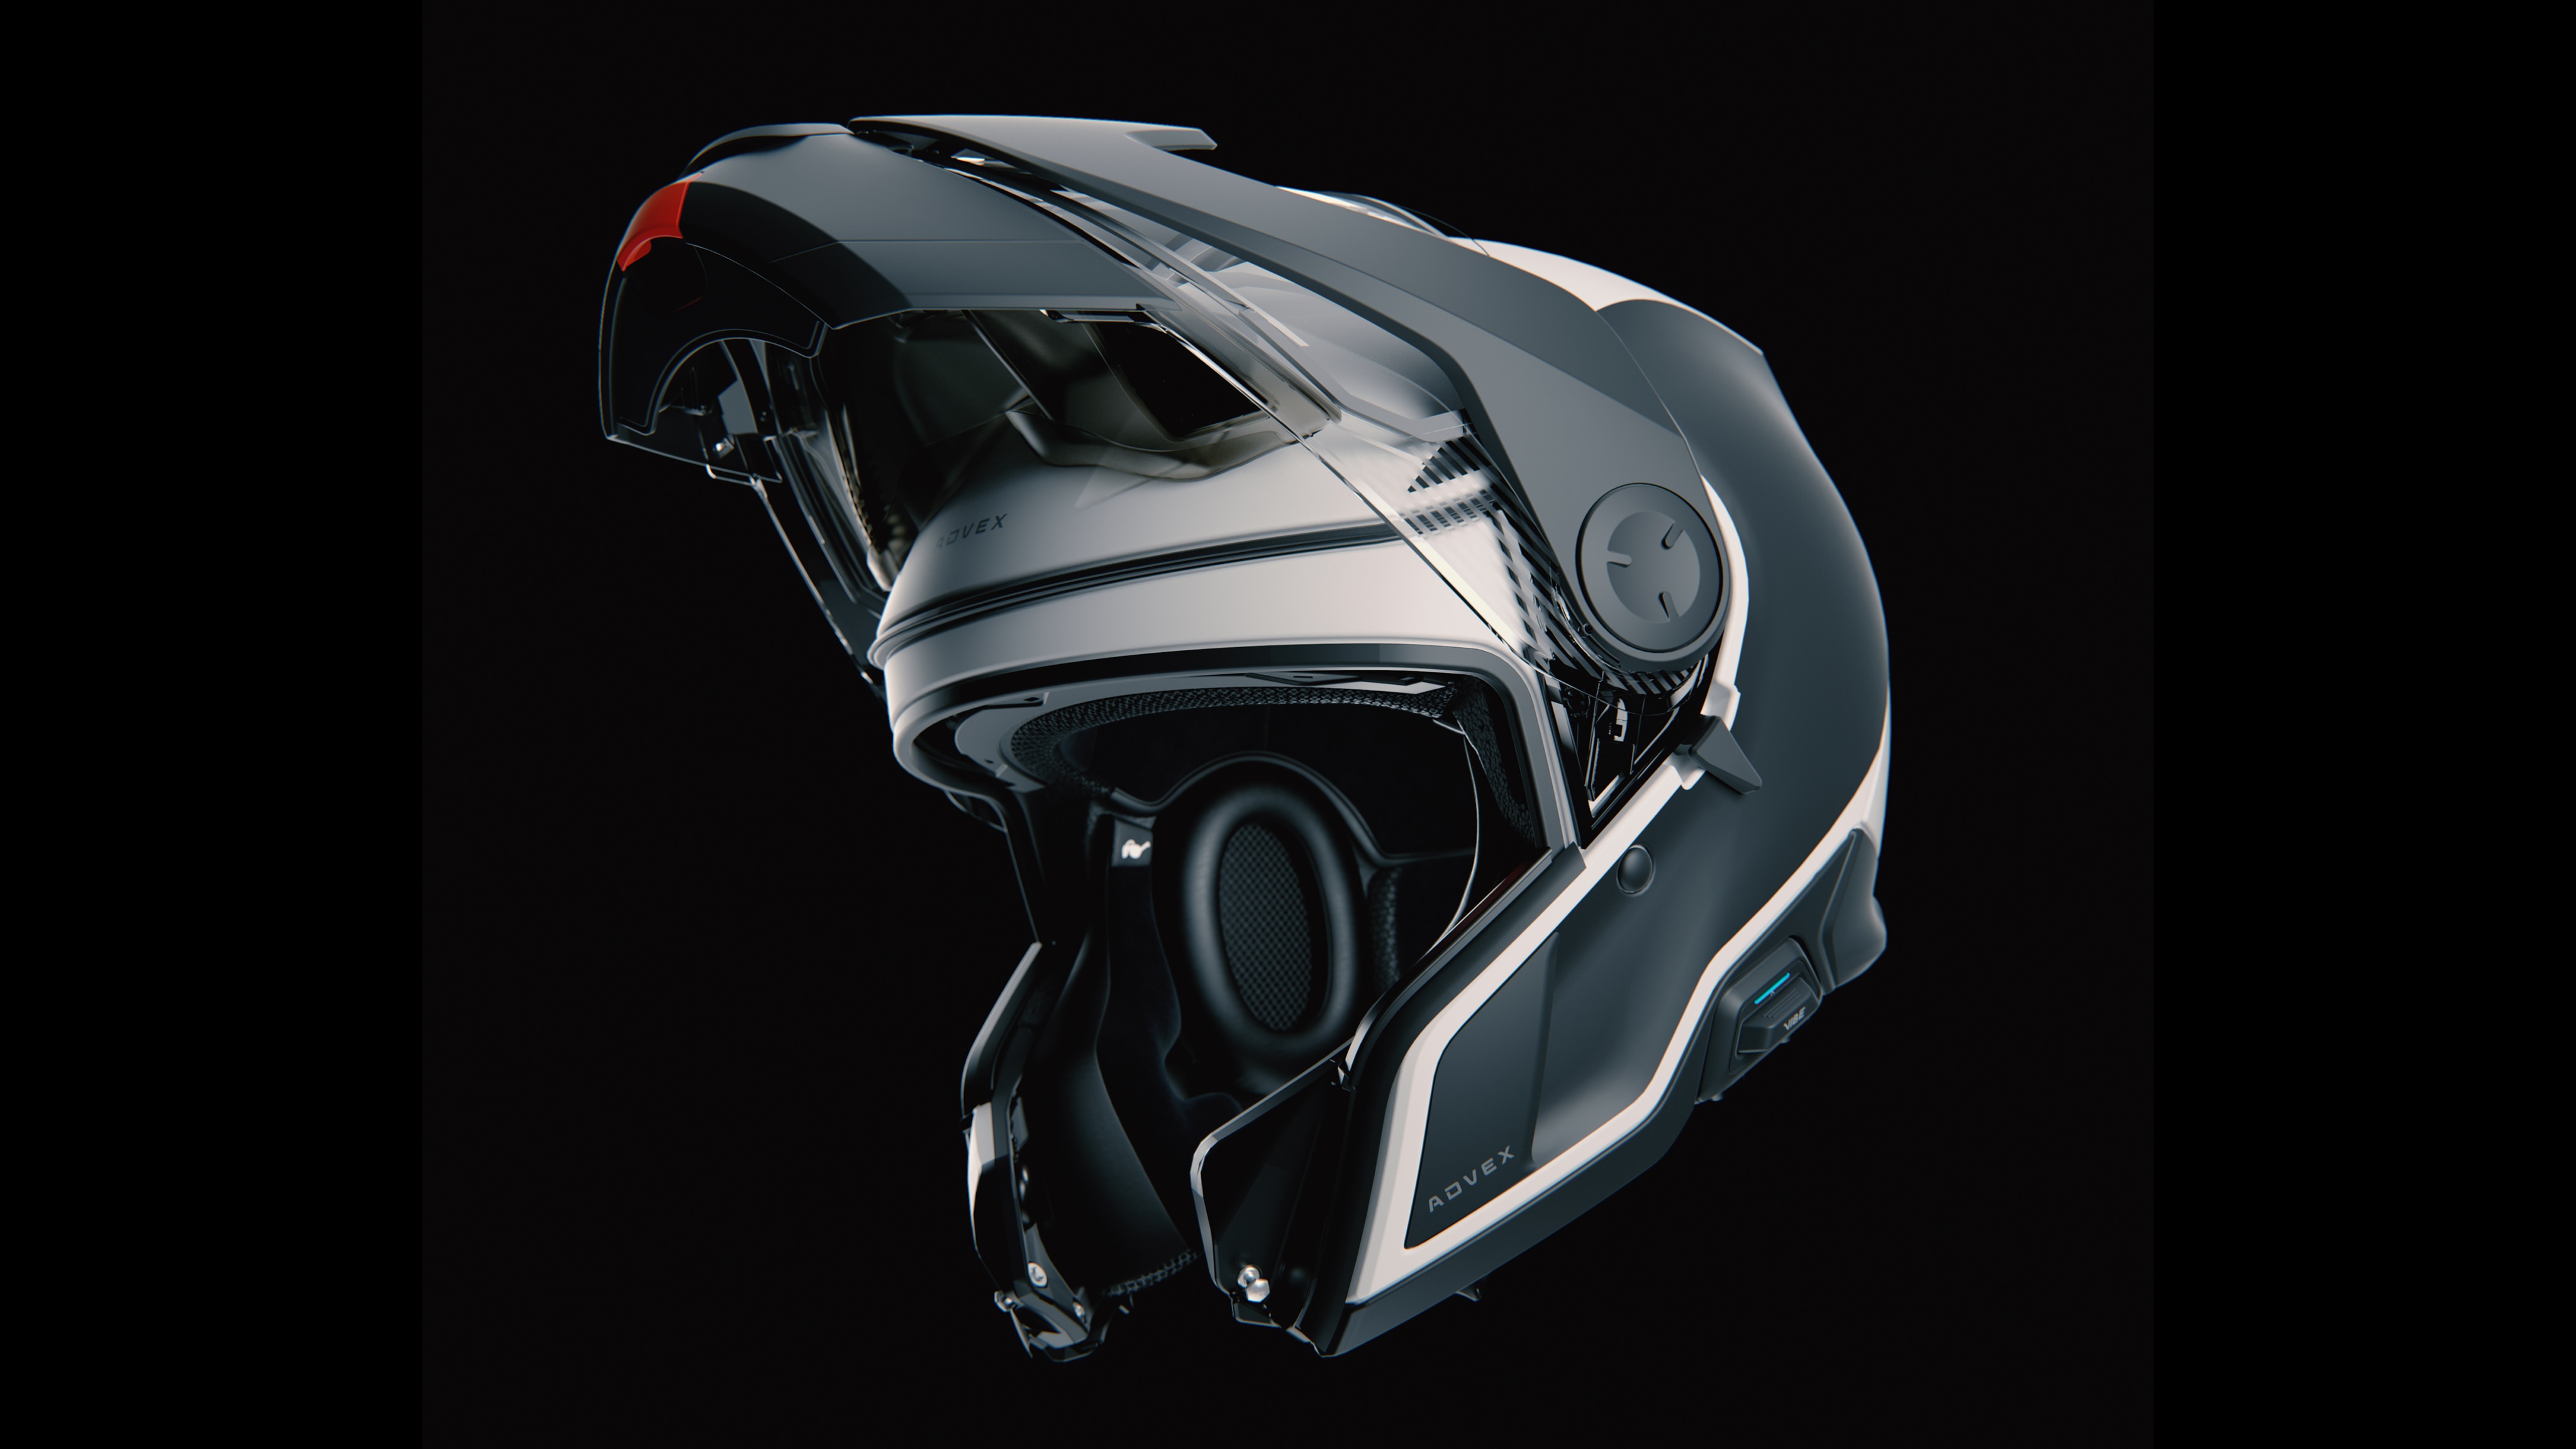 View of the new Advex helmet 